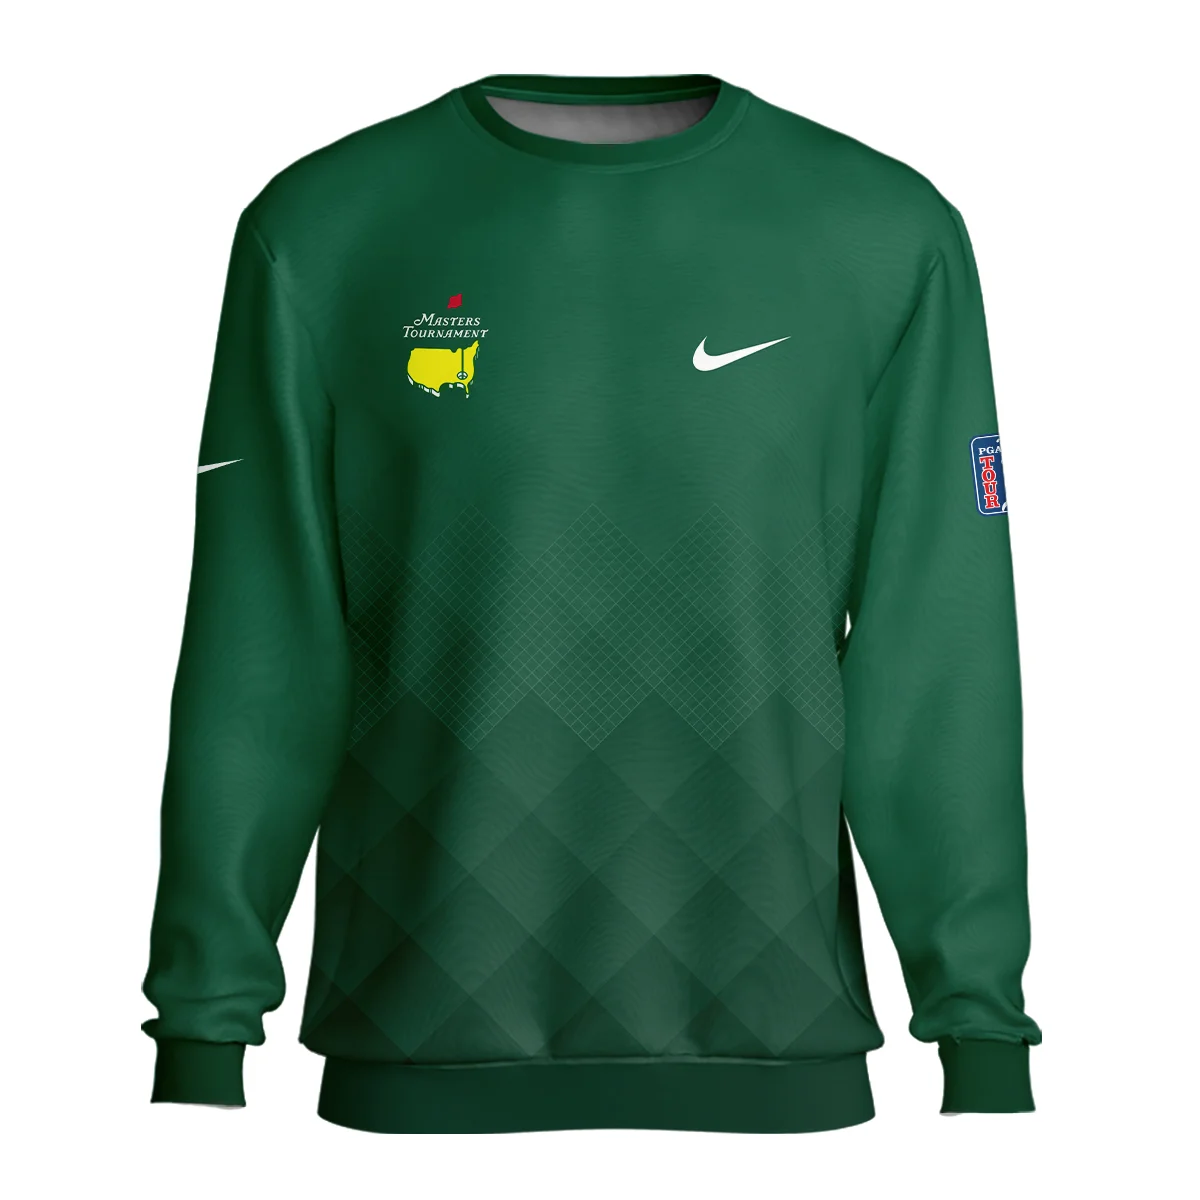 Masters Tournament Nike Gradient Dark Green Pattern Unisex Sweatshirt Style Classic Sweatshirt